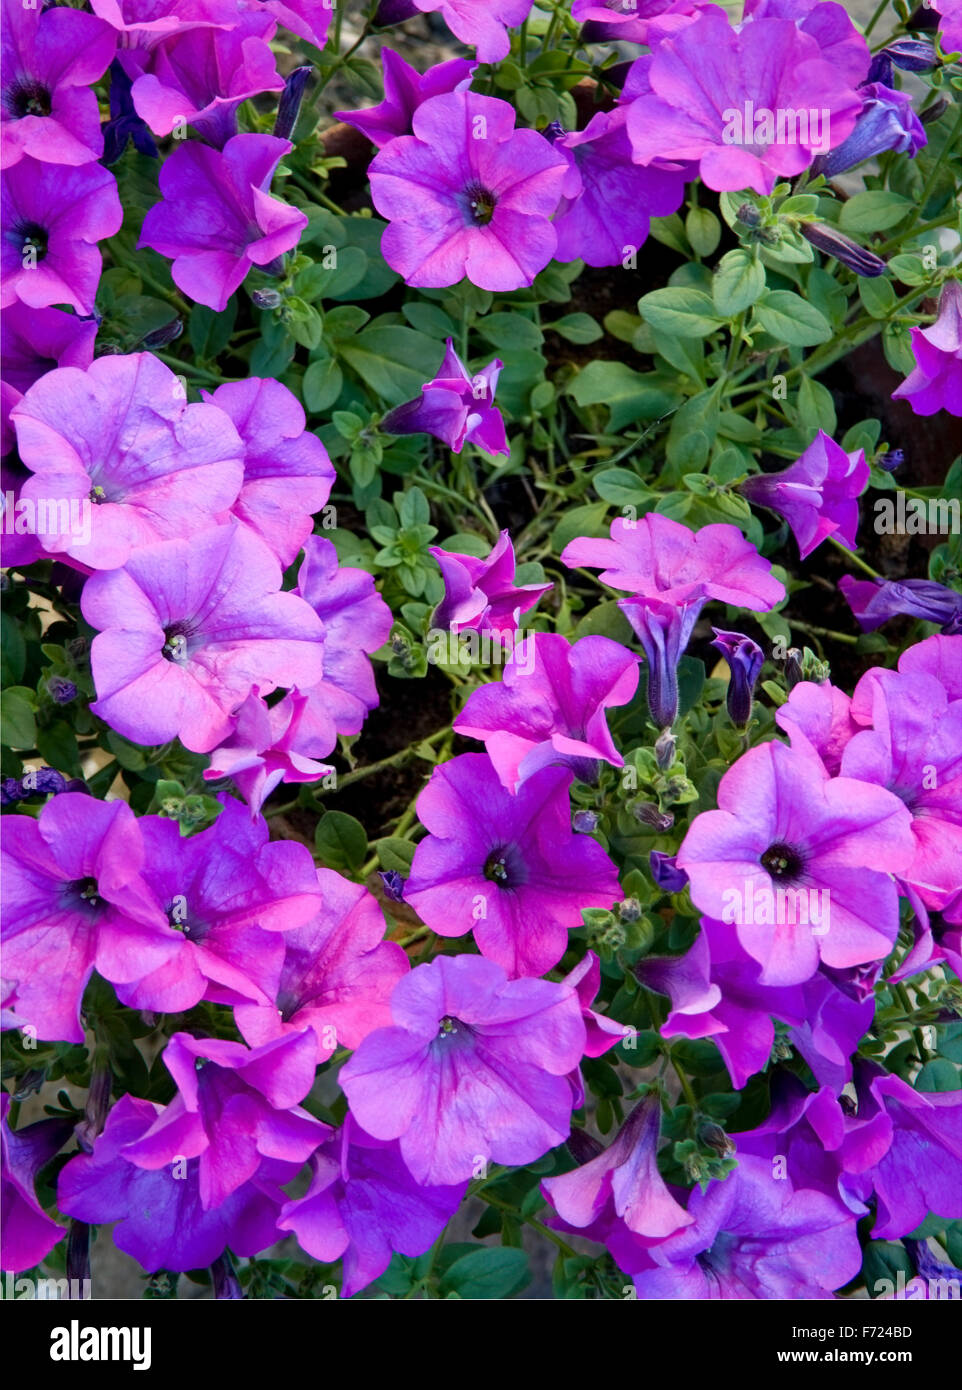 Violeta hermosa petunias - imagen cercana Foto de stock